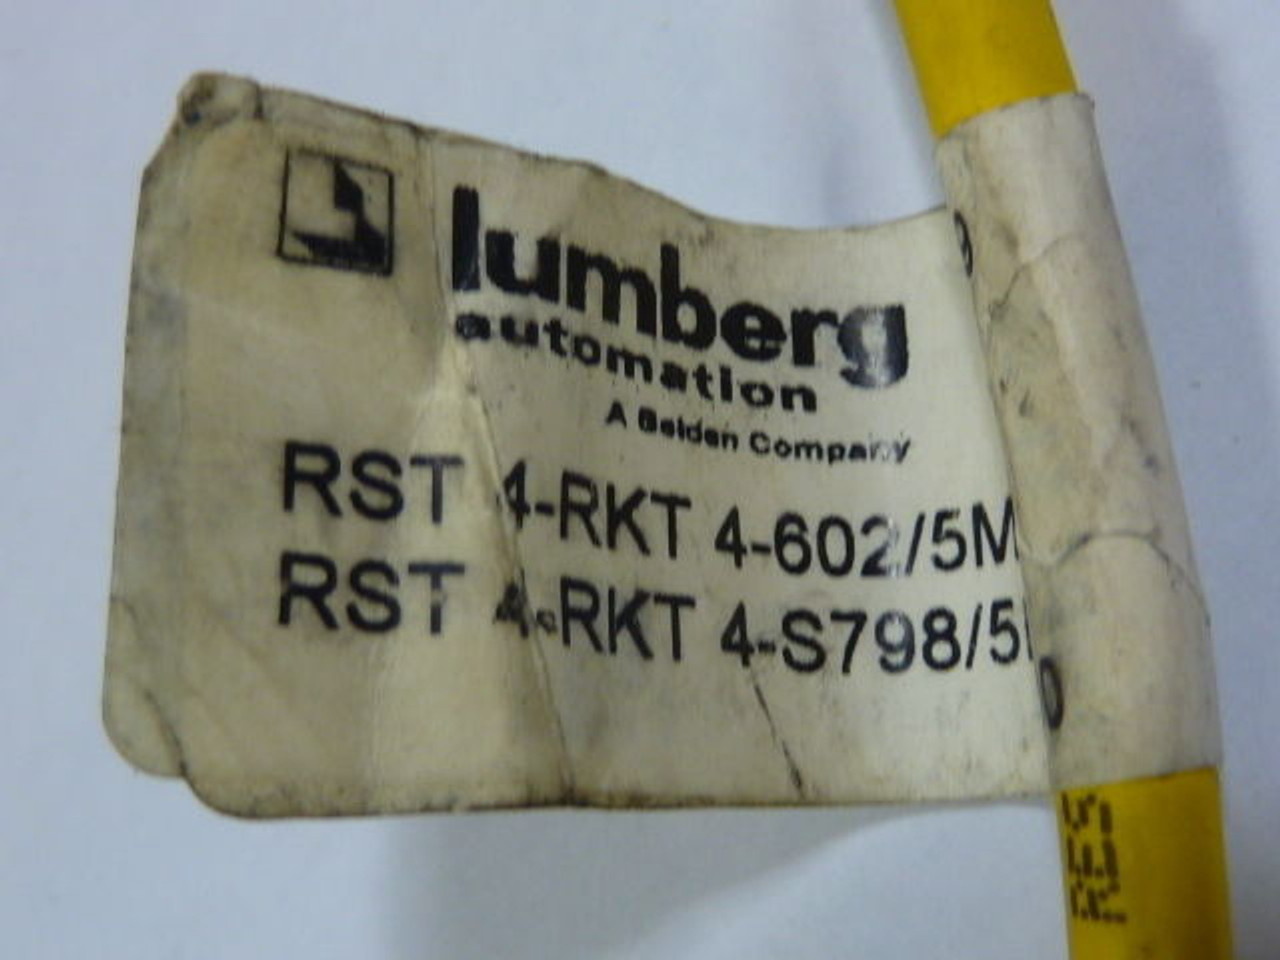 Lumberg RST4-RKT4-602/5M Male to Female Cordset USED